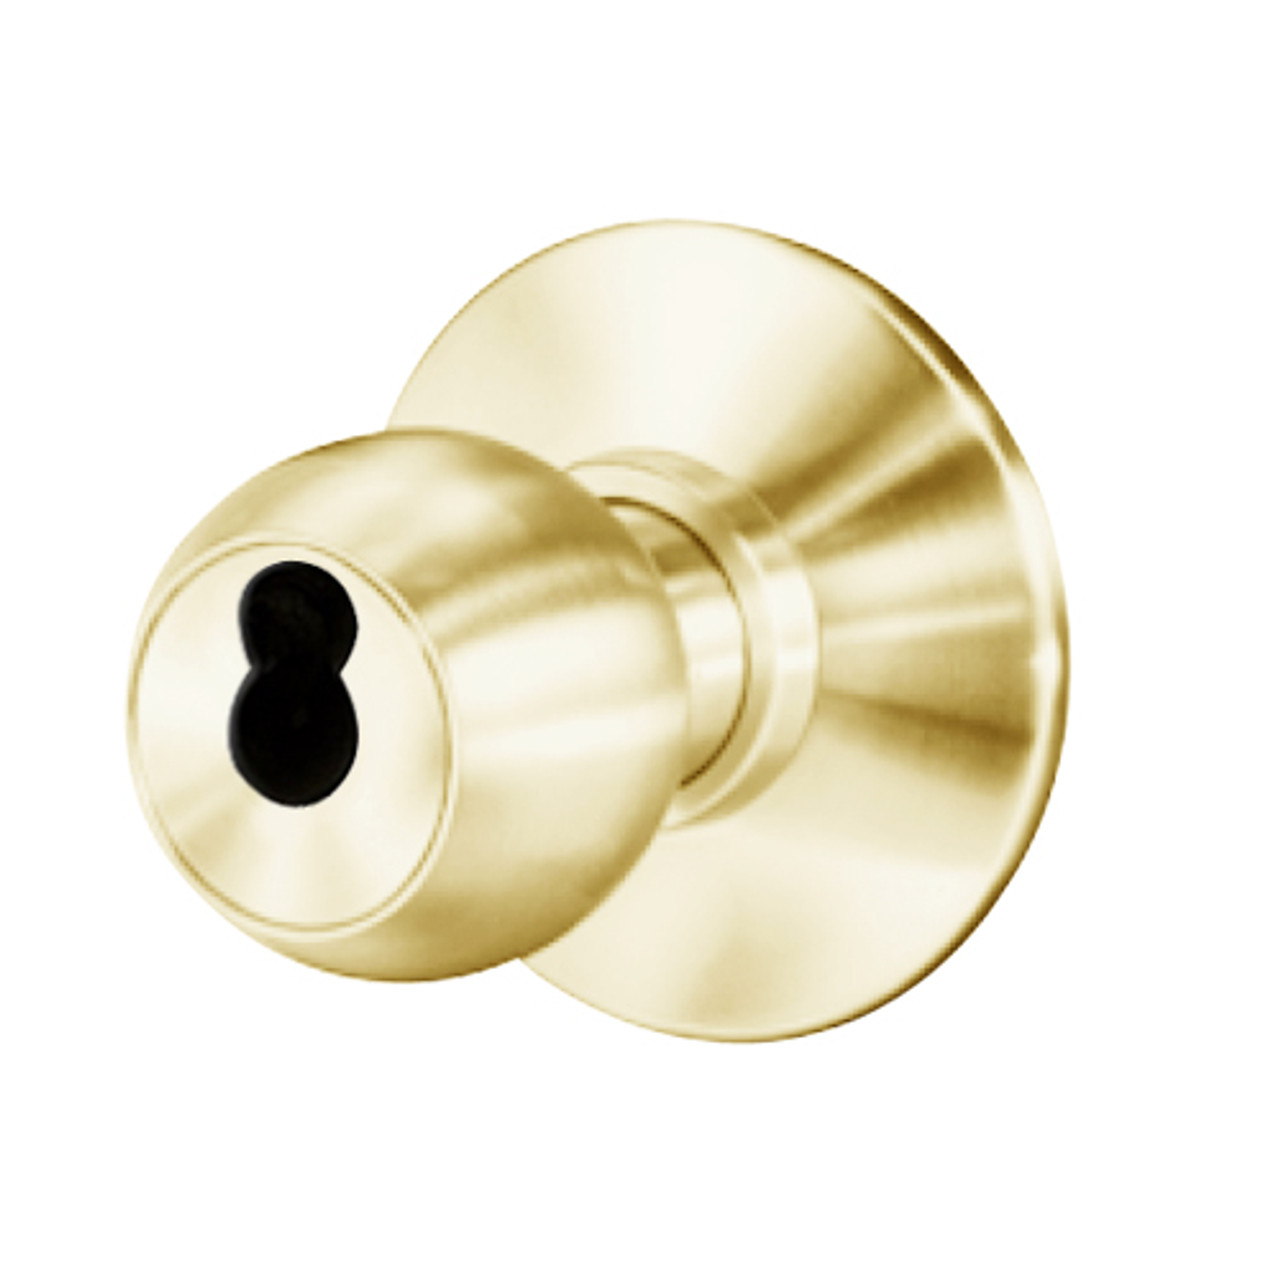 8K37YR4DSTK605 Best 8K Series Exit Heavy Duty Cylindrical Knob Locks with Round Style in Bright Brass